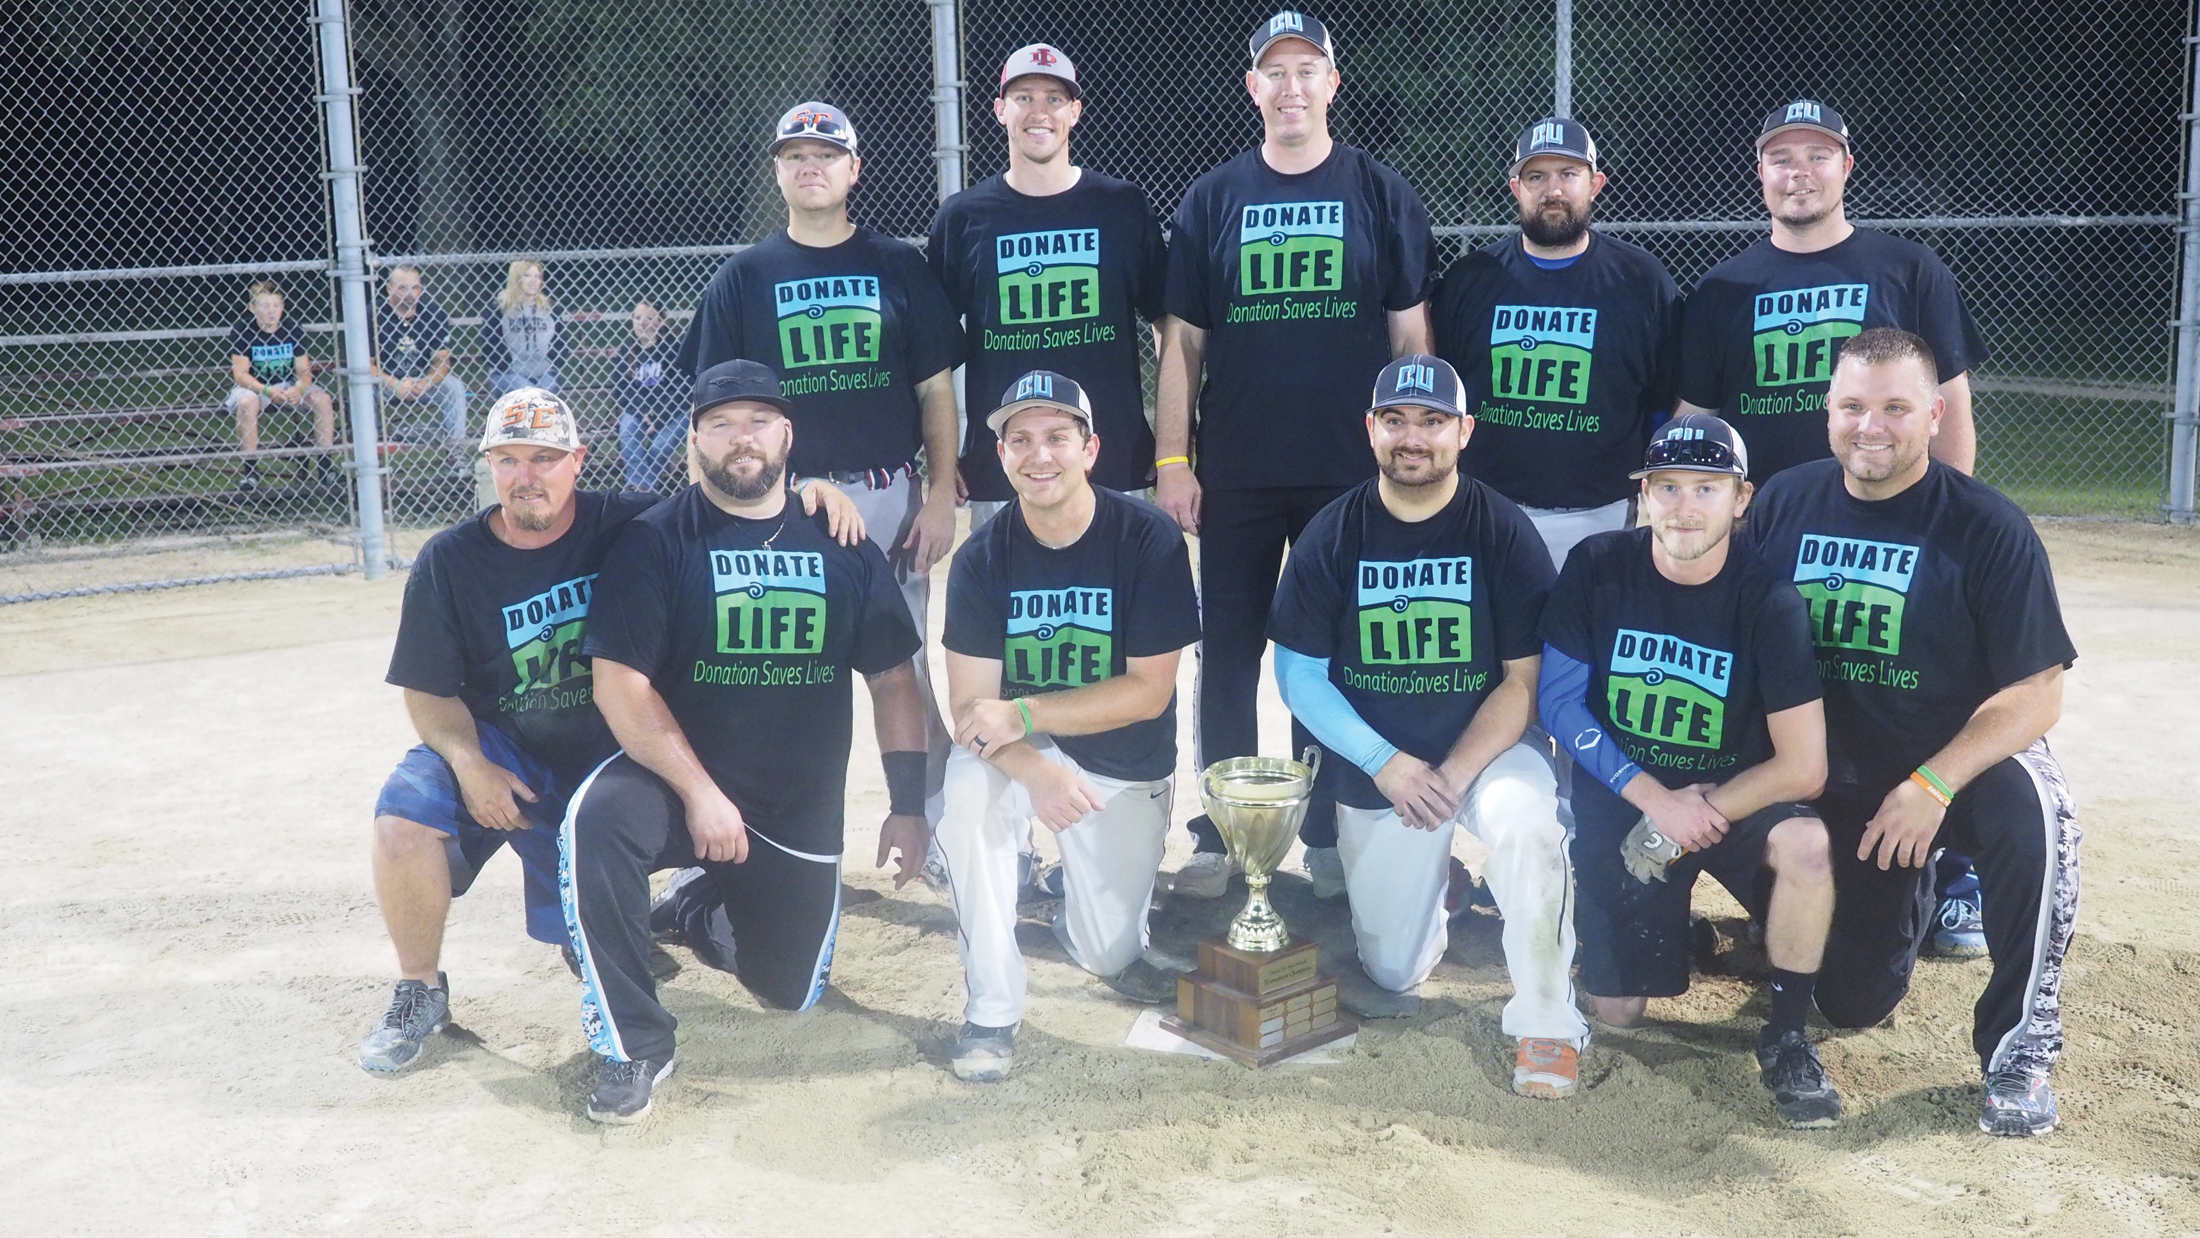 The Pub wins first CC Men’s Softball League Tournament title